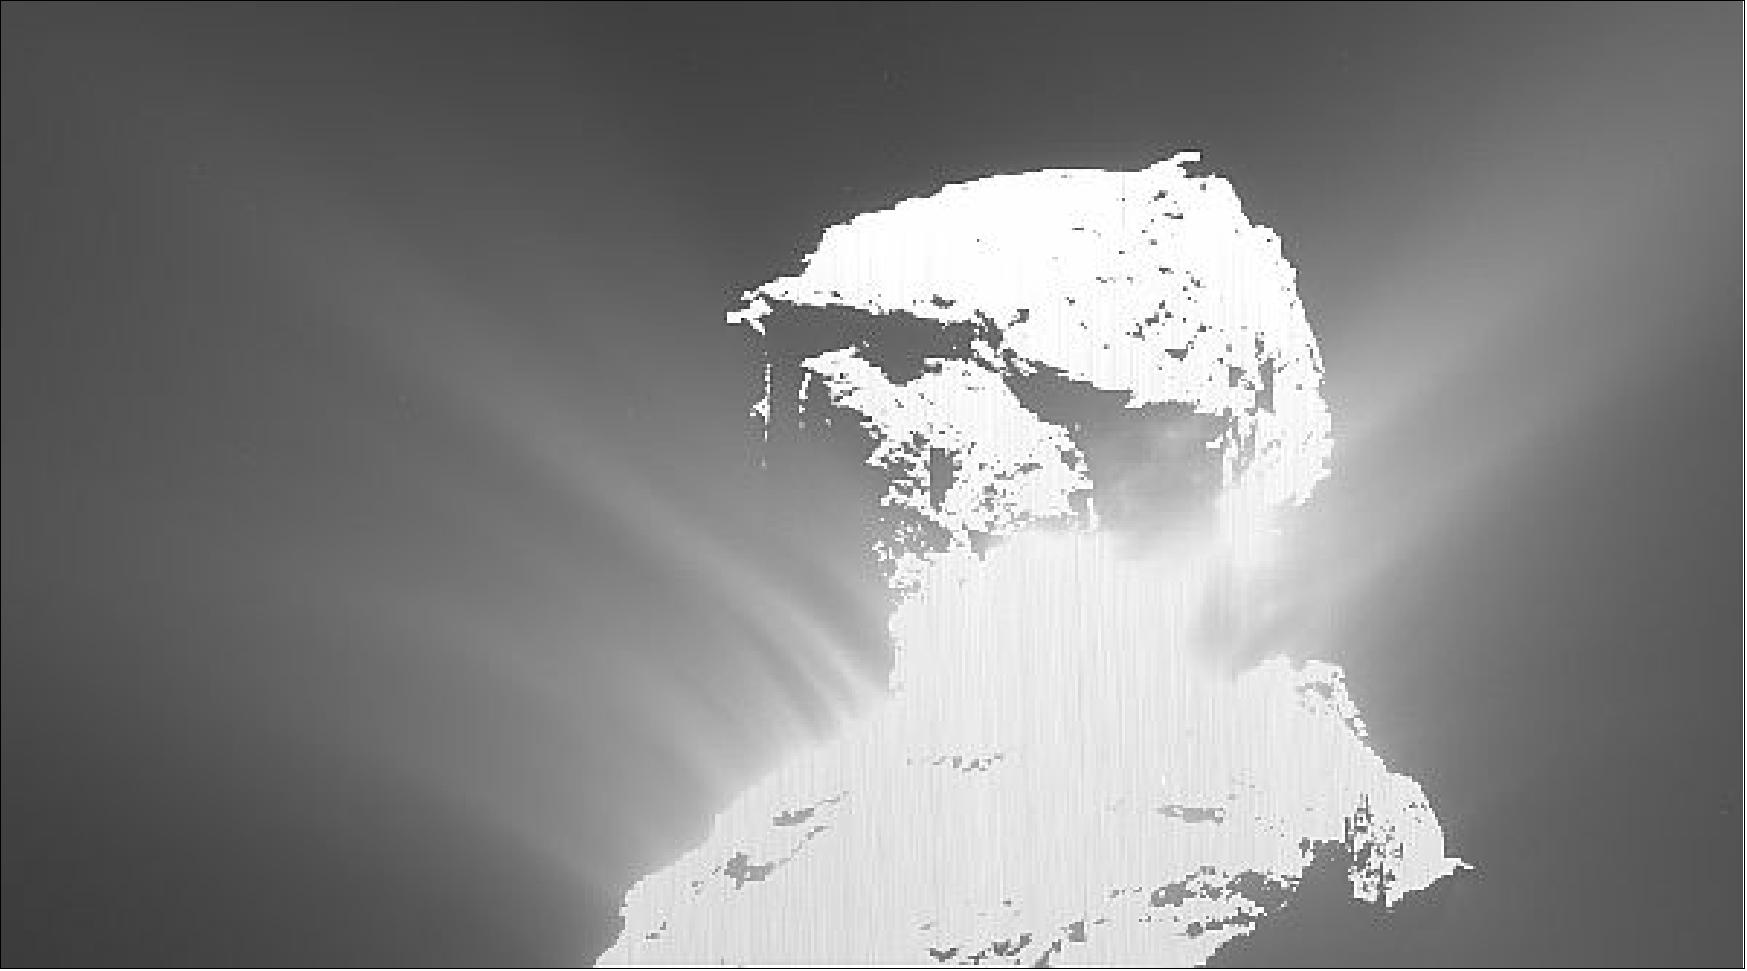 Figure 107: Outburst of Comet 67P/Churyumov-Gerasimenko on Feb. 19, 2016 observed by 9 instruments of the Rosetta Spacecraft (image credit: ESA/Rosetta/MPS for OSIRIS Team MPS/UPD/LAM/IAA/SSO/INTA/UPM/DASP/IDA)